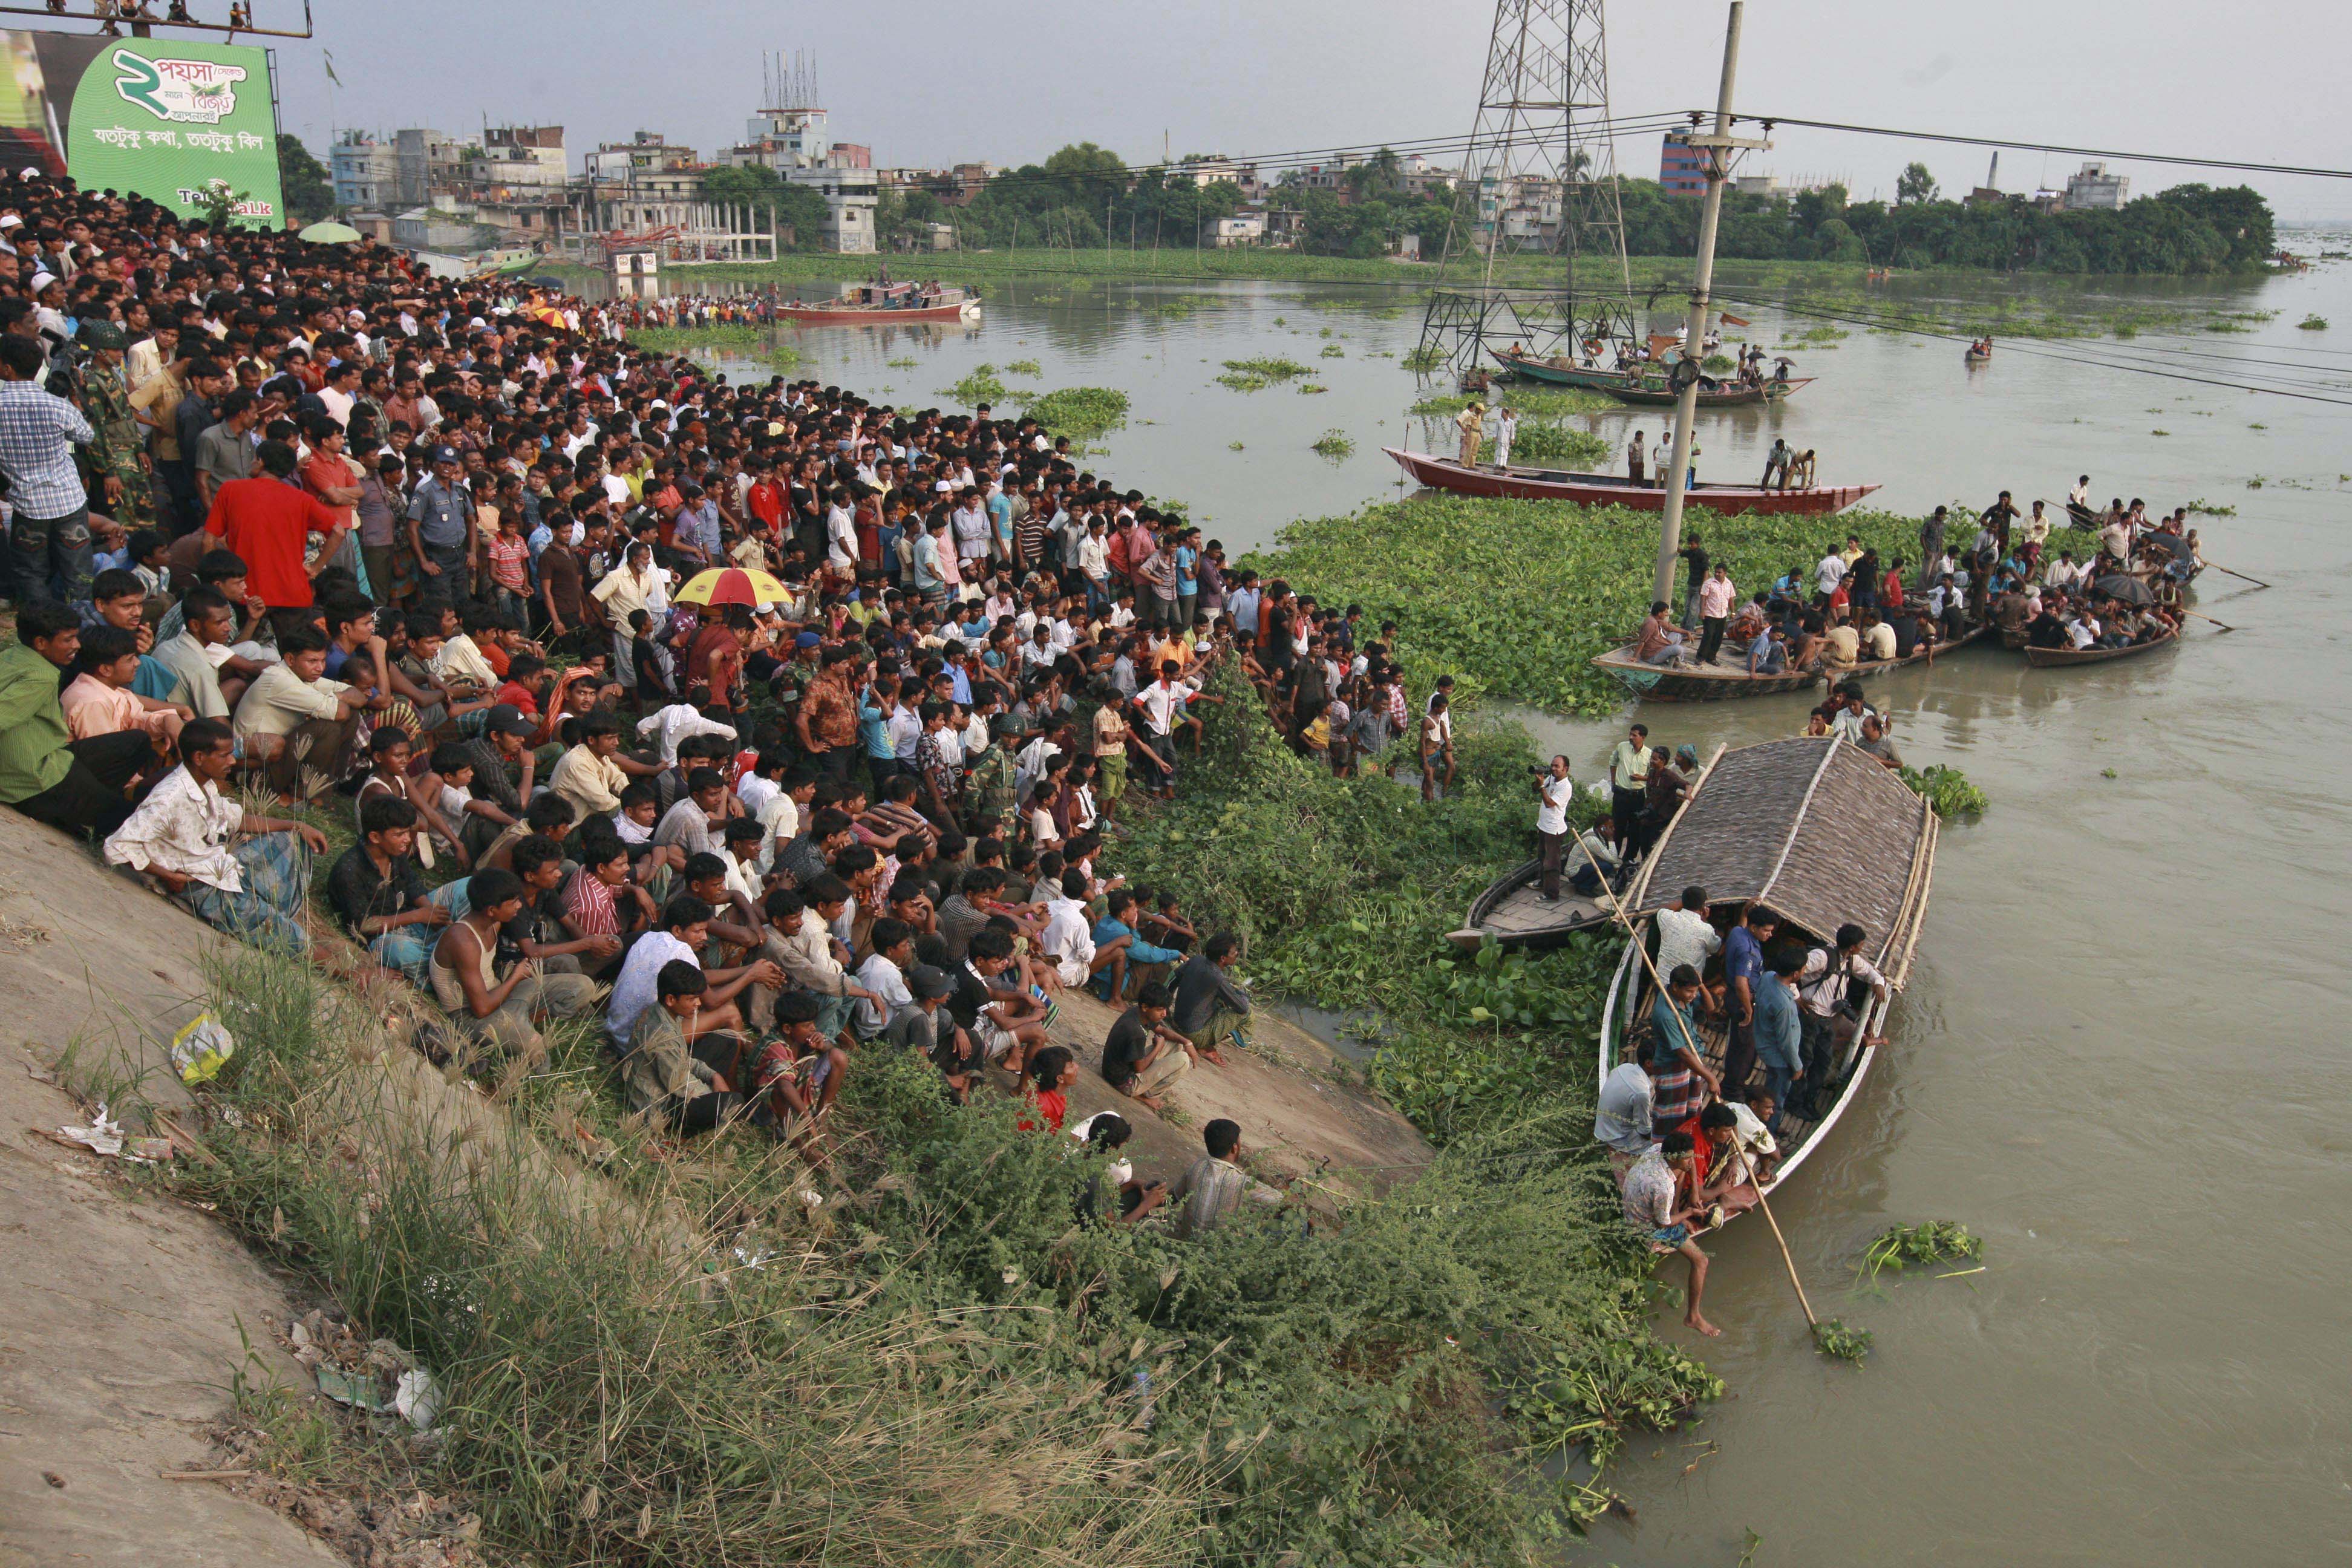 regn, Vatten, Bangladesh, Flod, Olycka, Buss